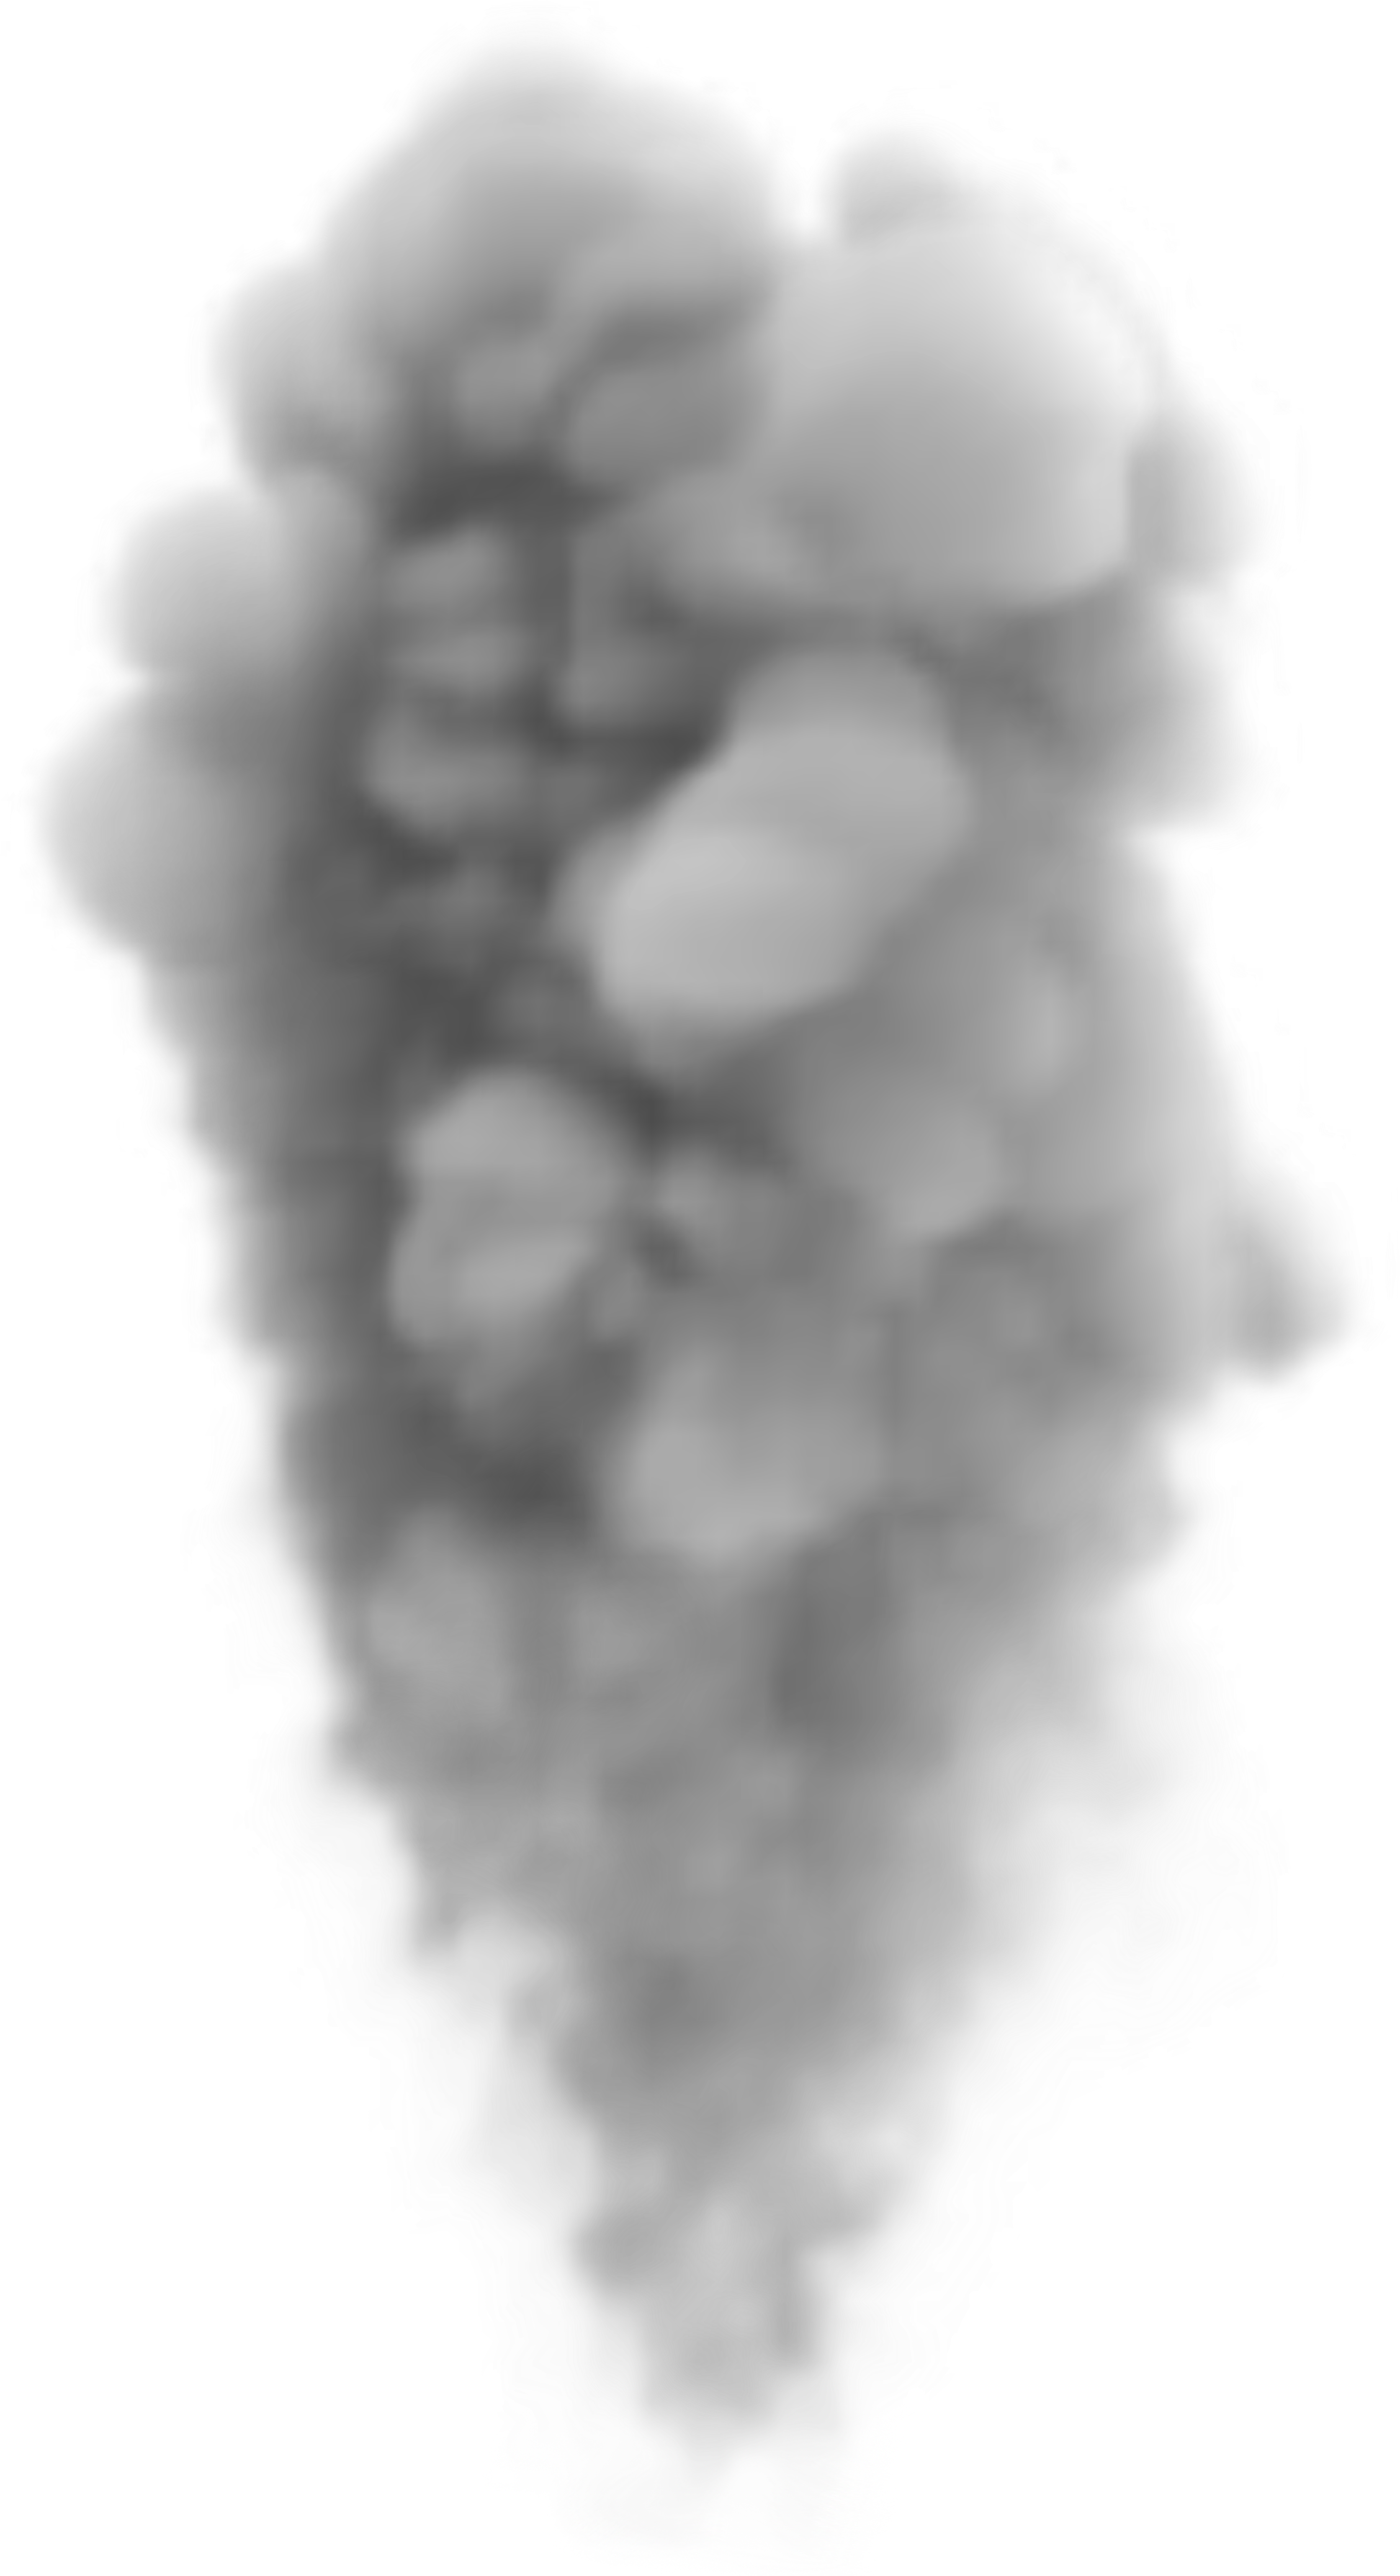 A Smoke Cloud On A Black Background